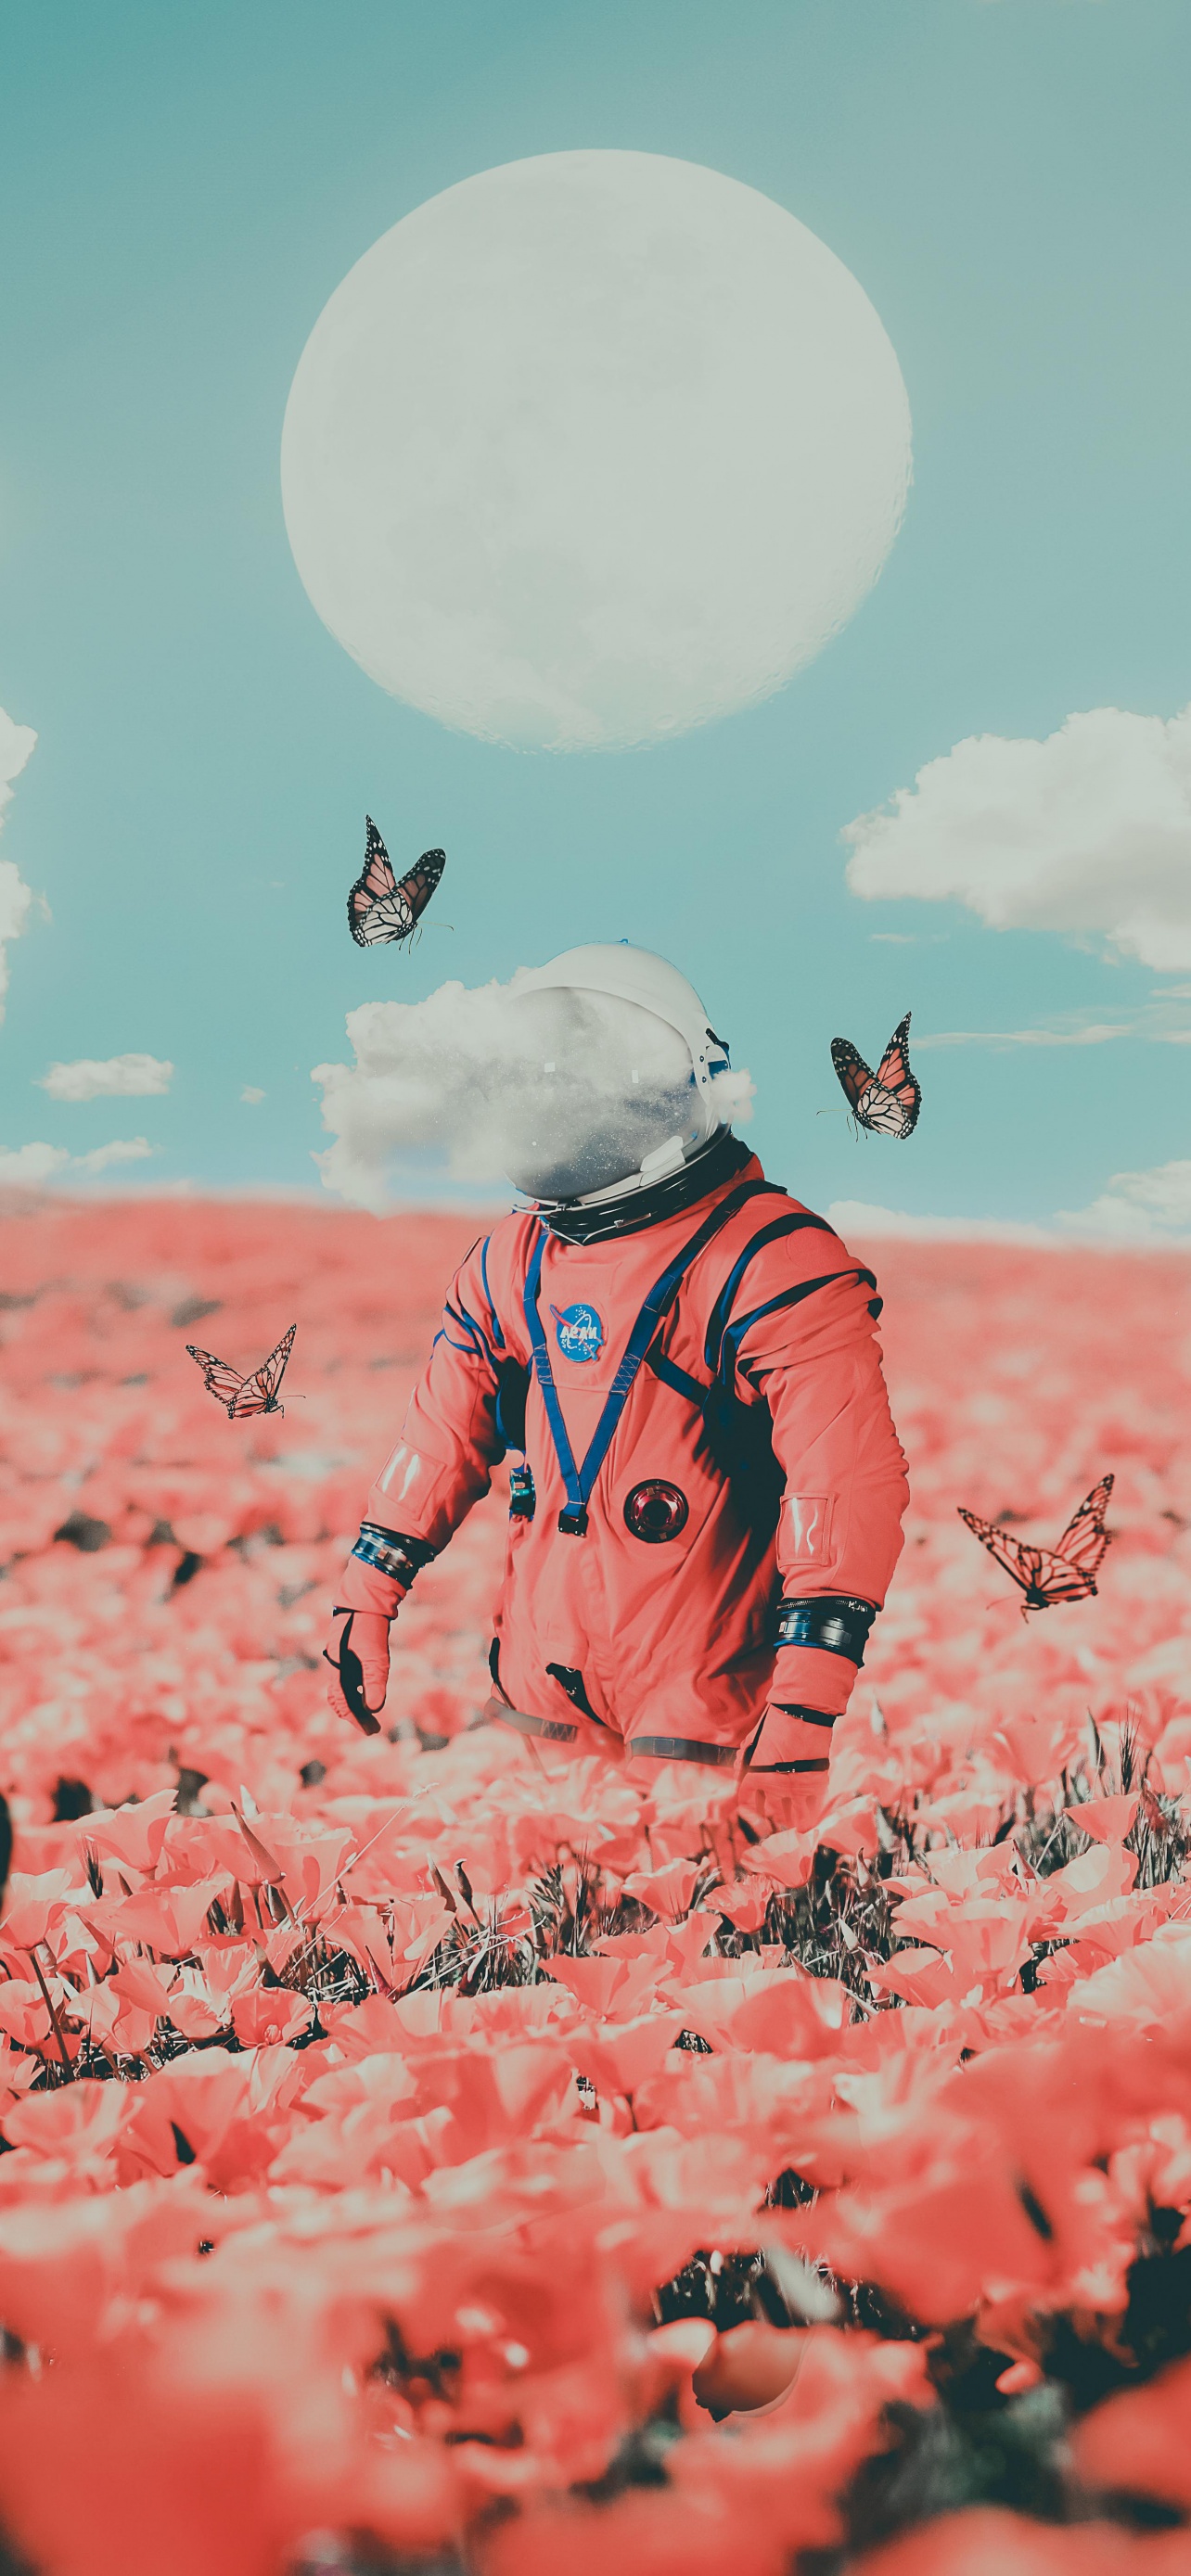 Astronaut Wallpaper HD 4k by SahibDM on DeviantArt